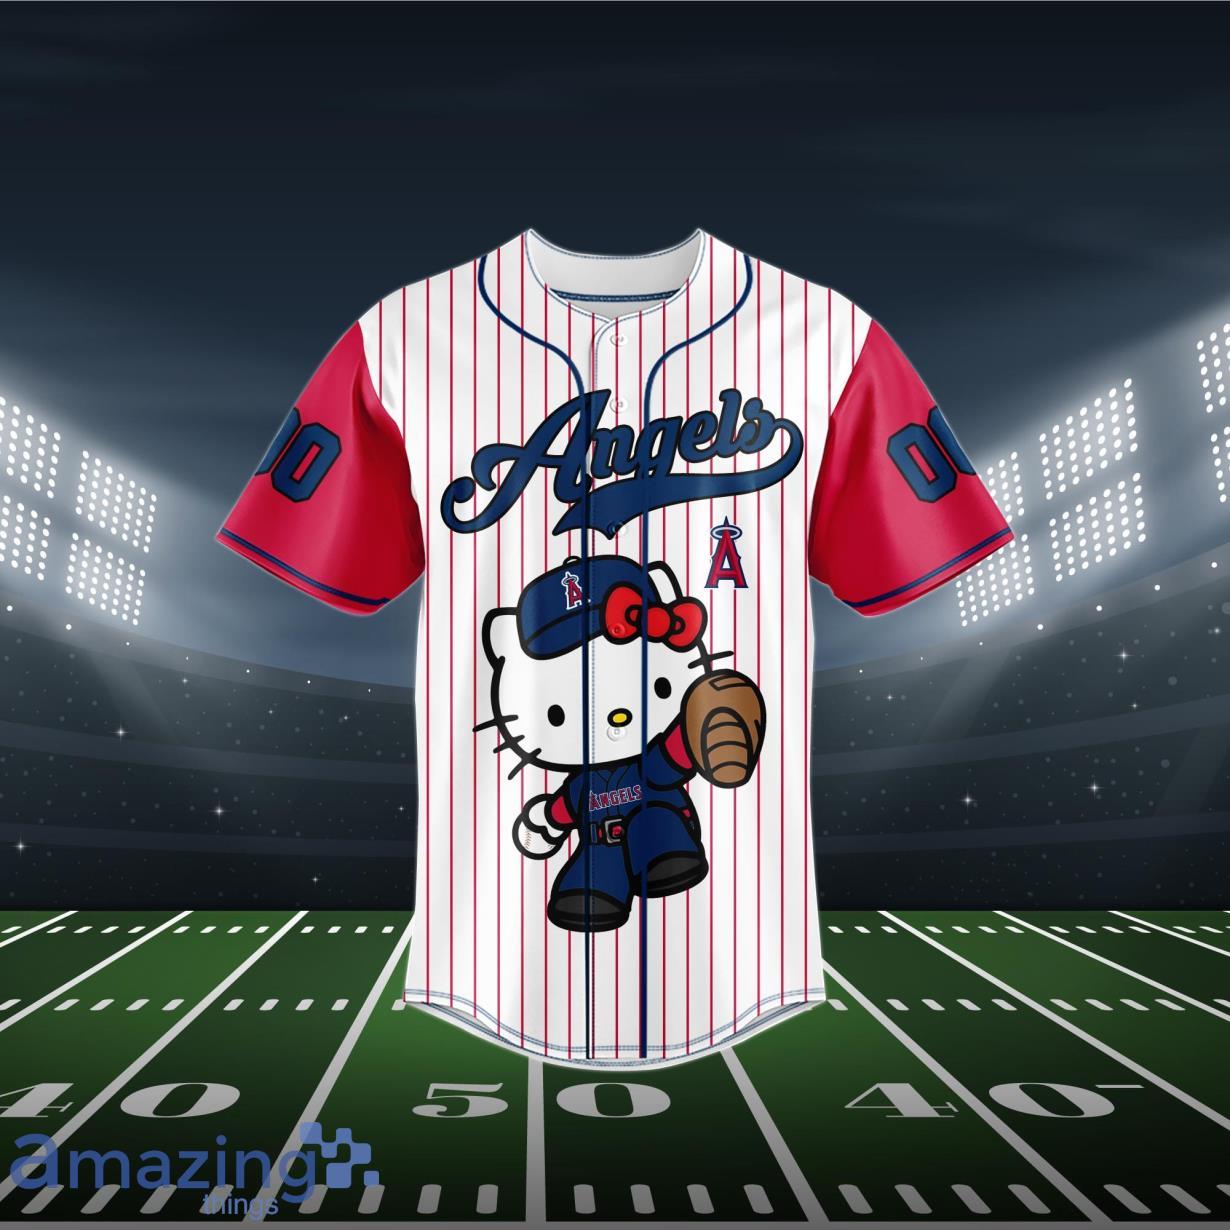 Los Angeles Angels Baseball Jersey MLB Hello Kitty Custom Name & Number